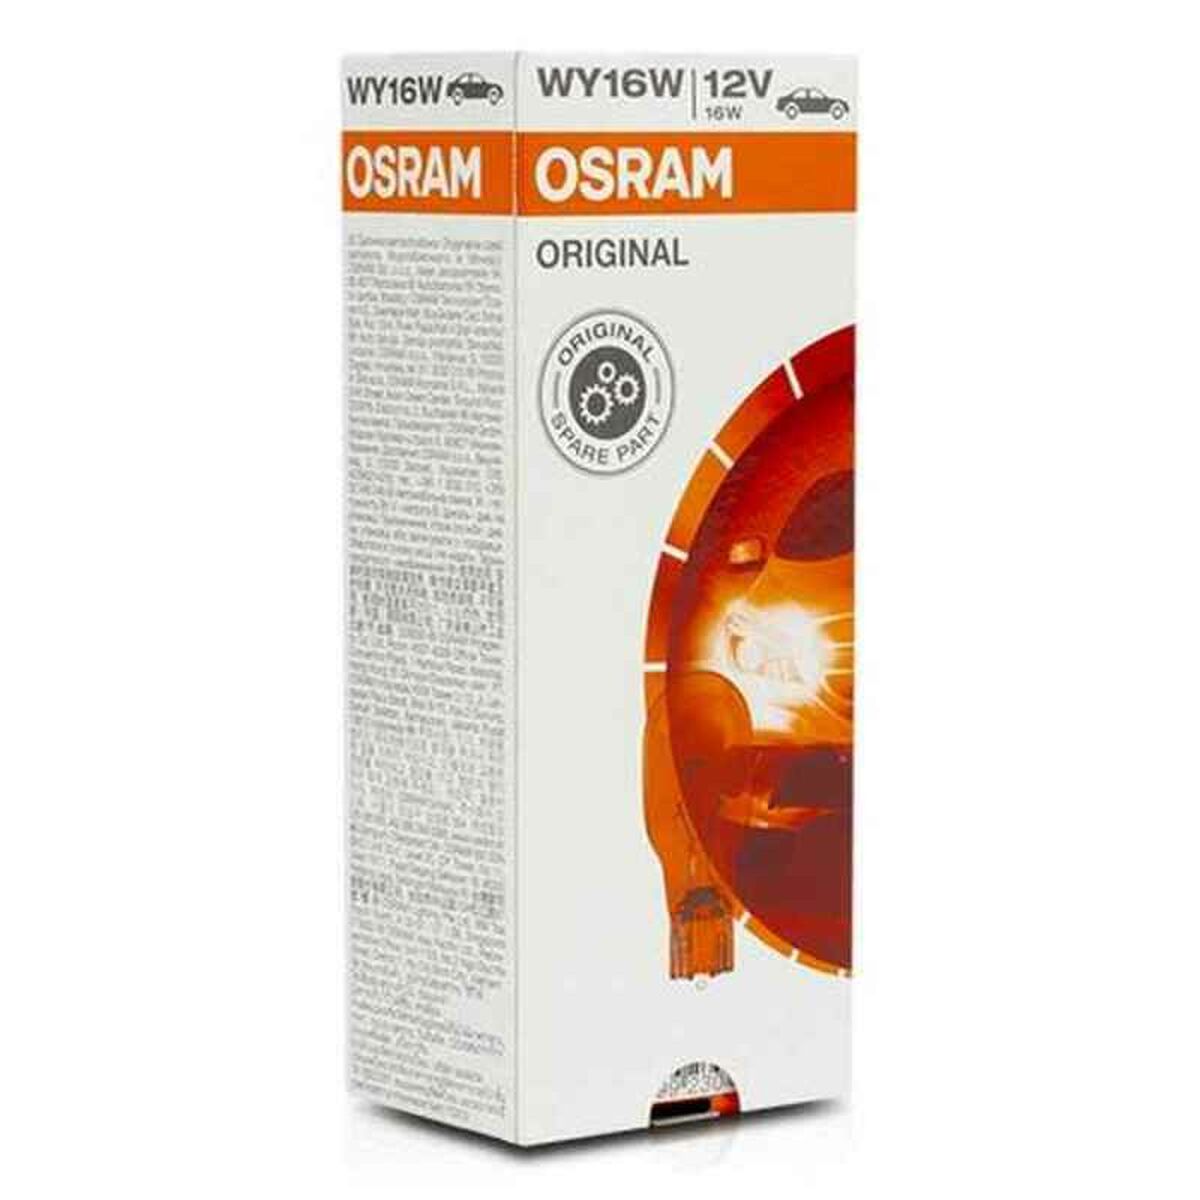 Автомобильная лампа OS921NA Osram OS921NA WY16W 16W 12V (10 pcs)